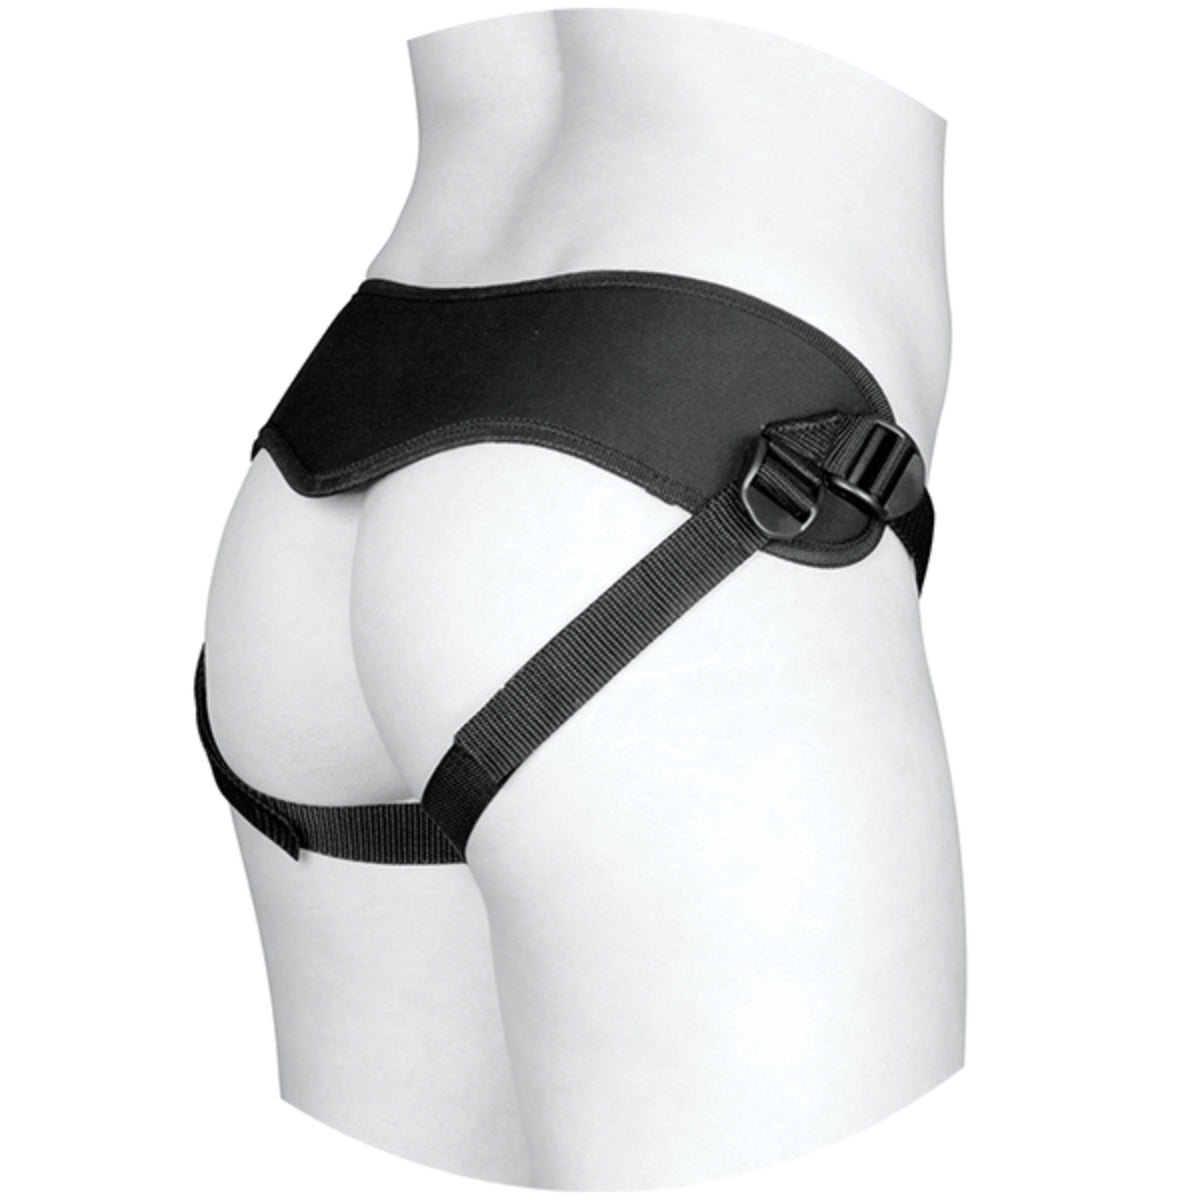 Strap On Harness Doc Johnson Vac-U-Lock Supreme Harness With Vibrating Plug Black   